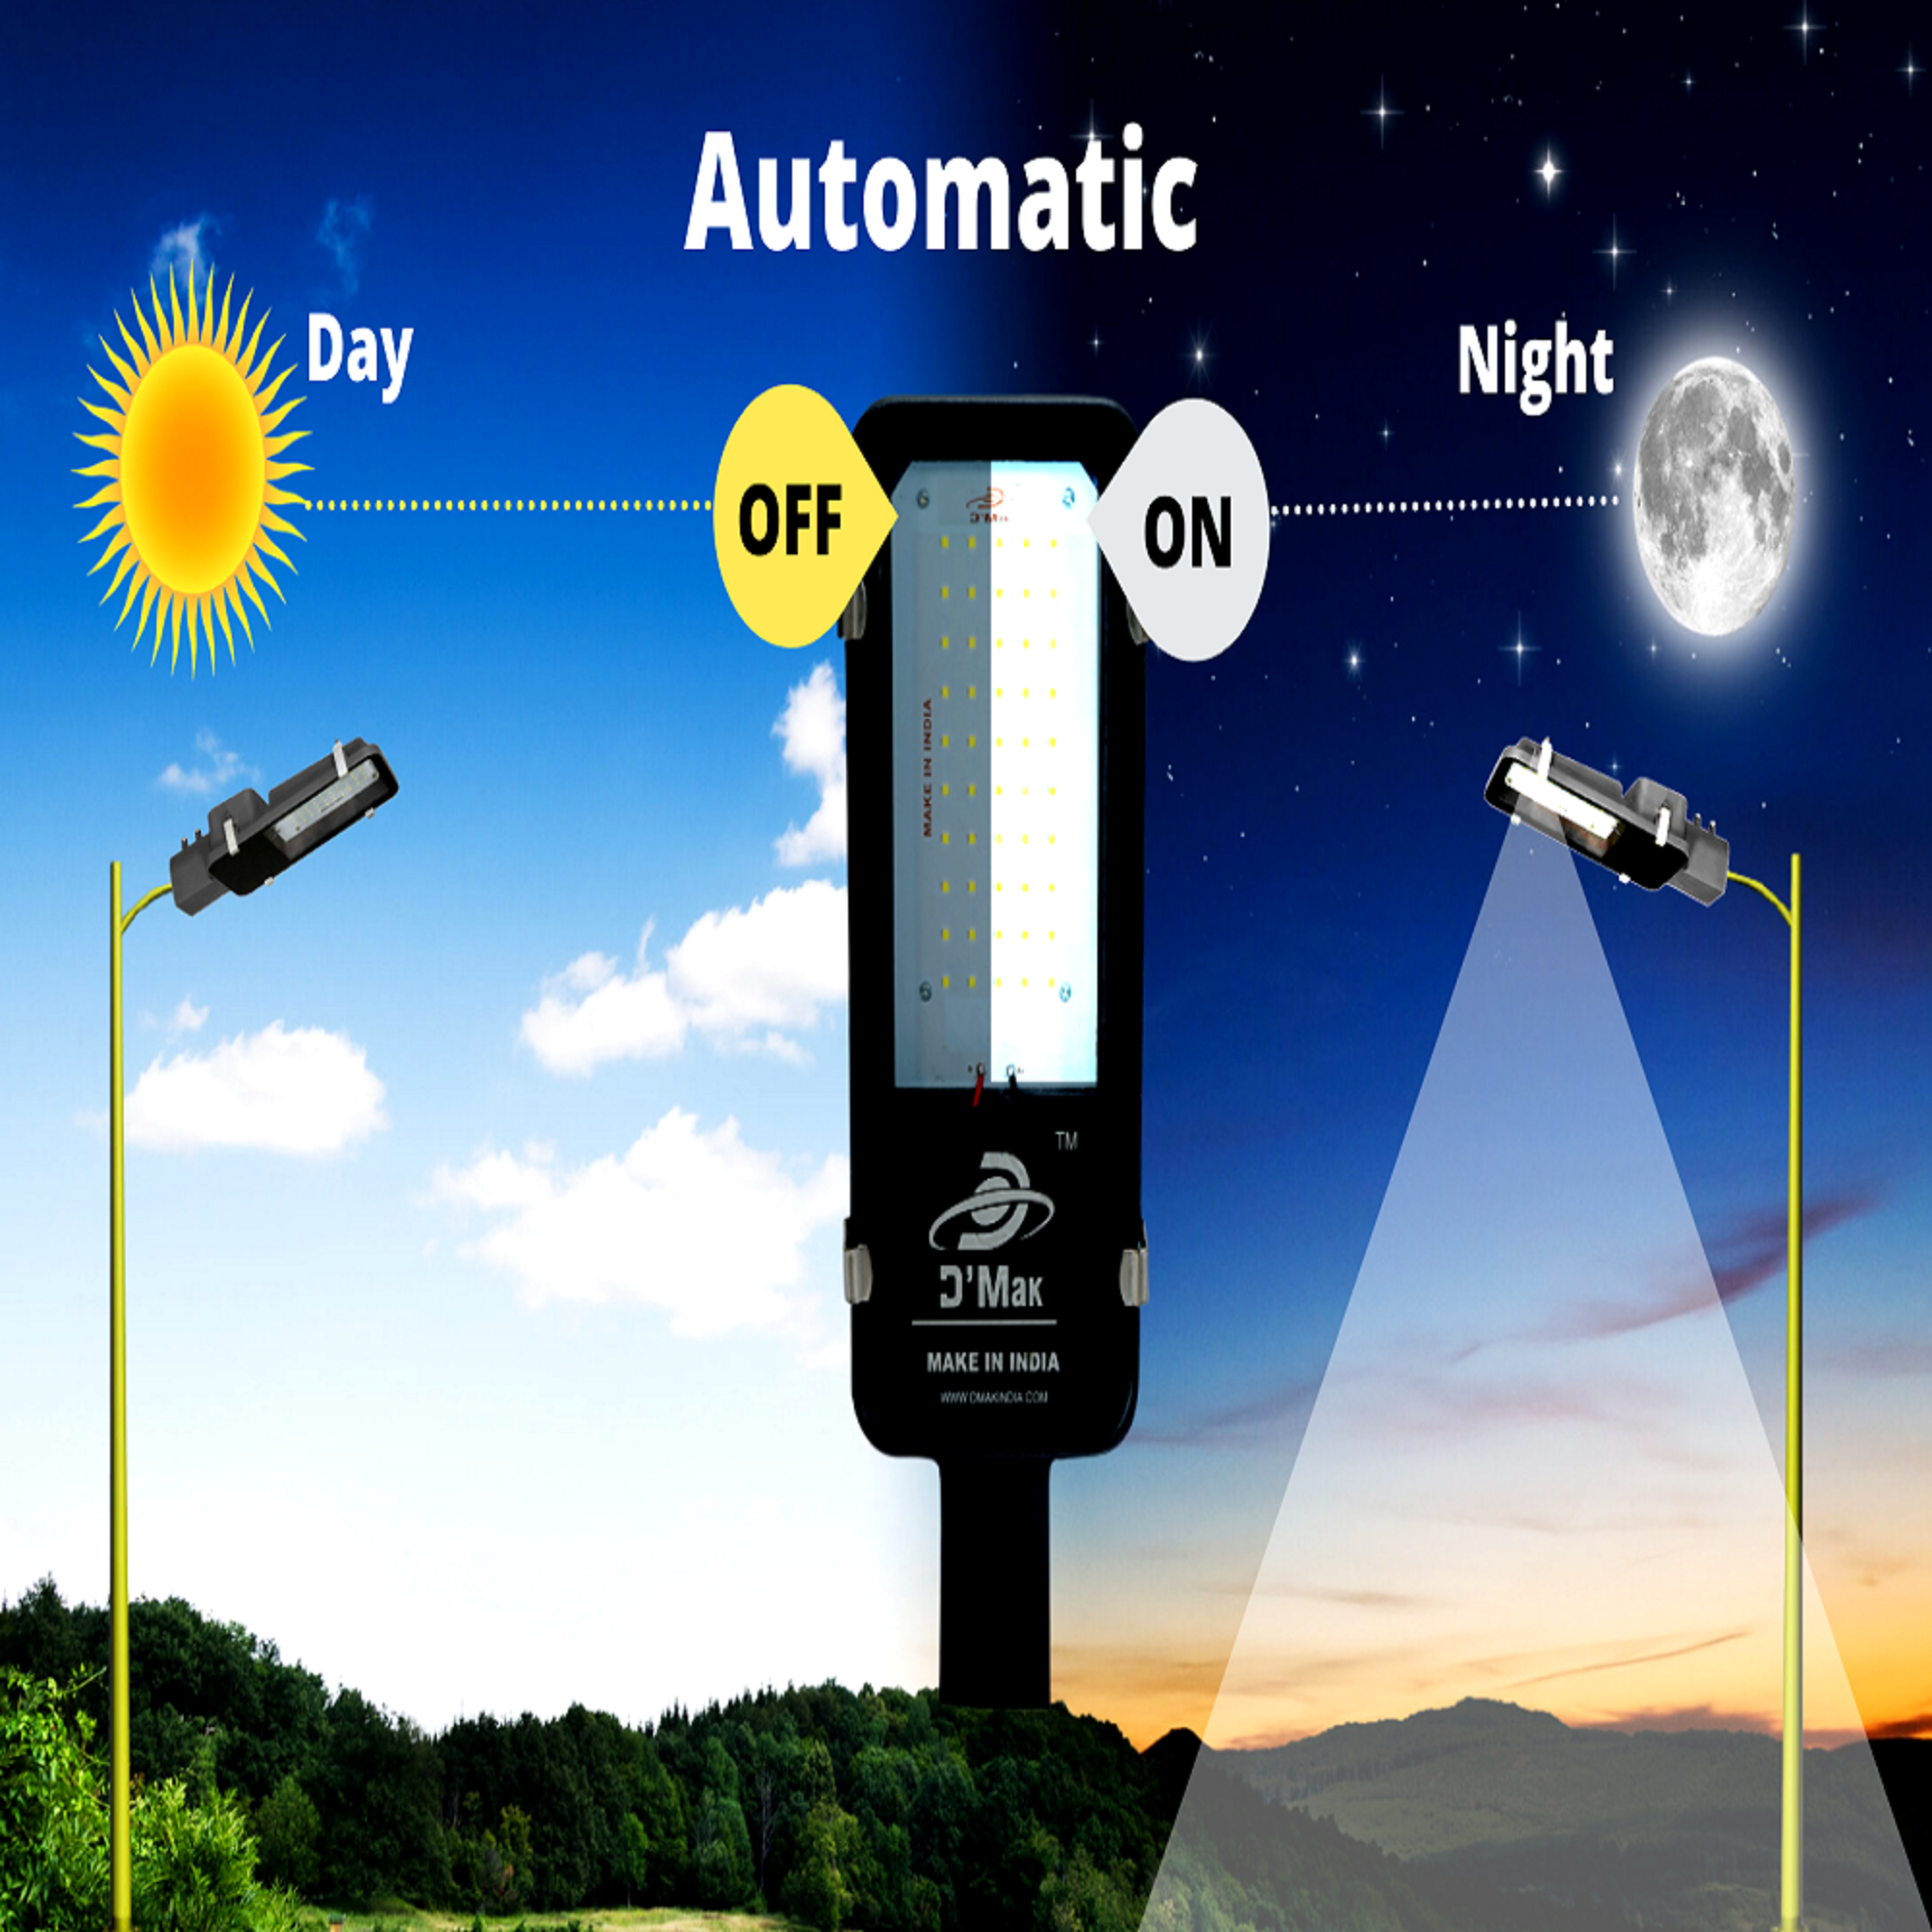 36 Watt Automatic Sensor System LED Street Light Waterproof IP65 for Outdoor Purposes